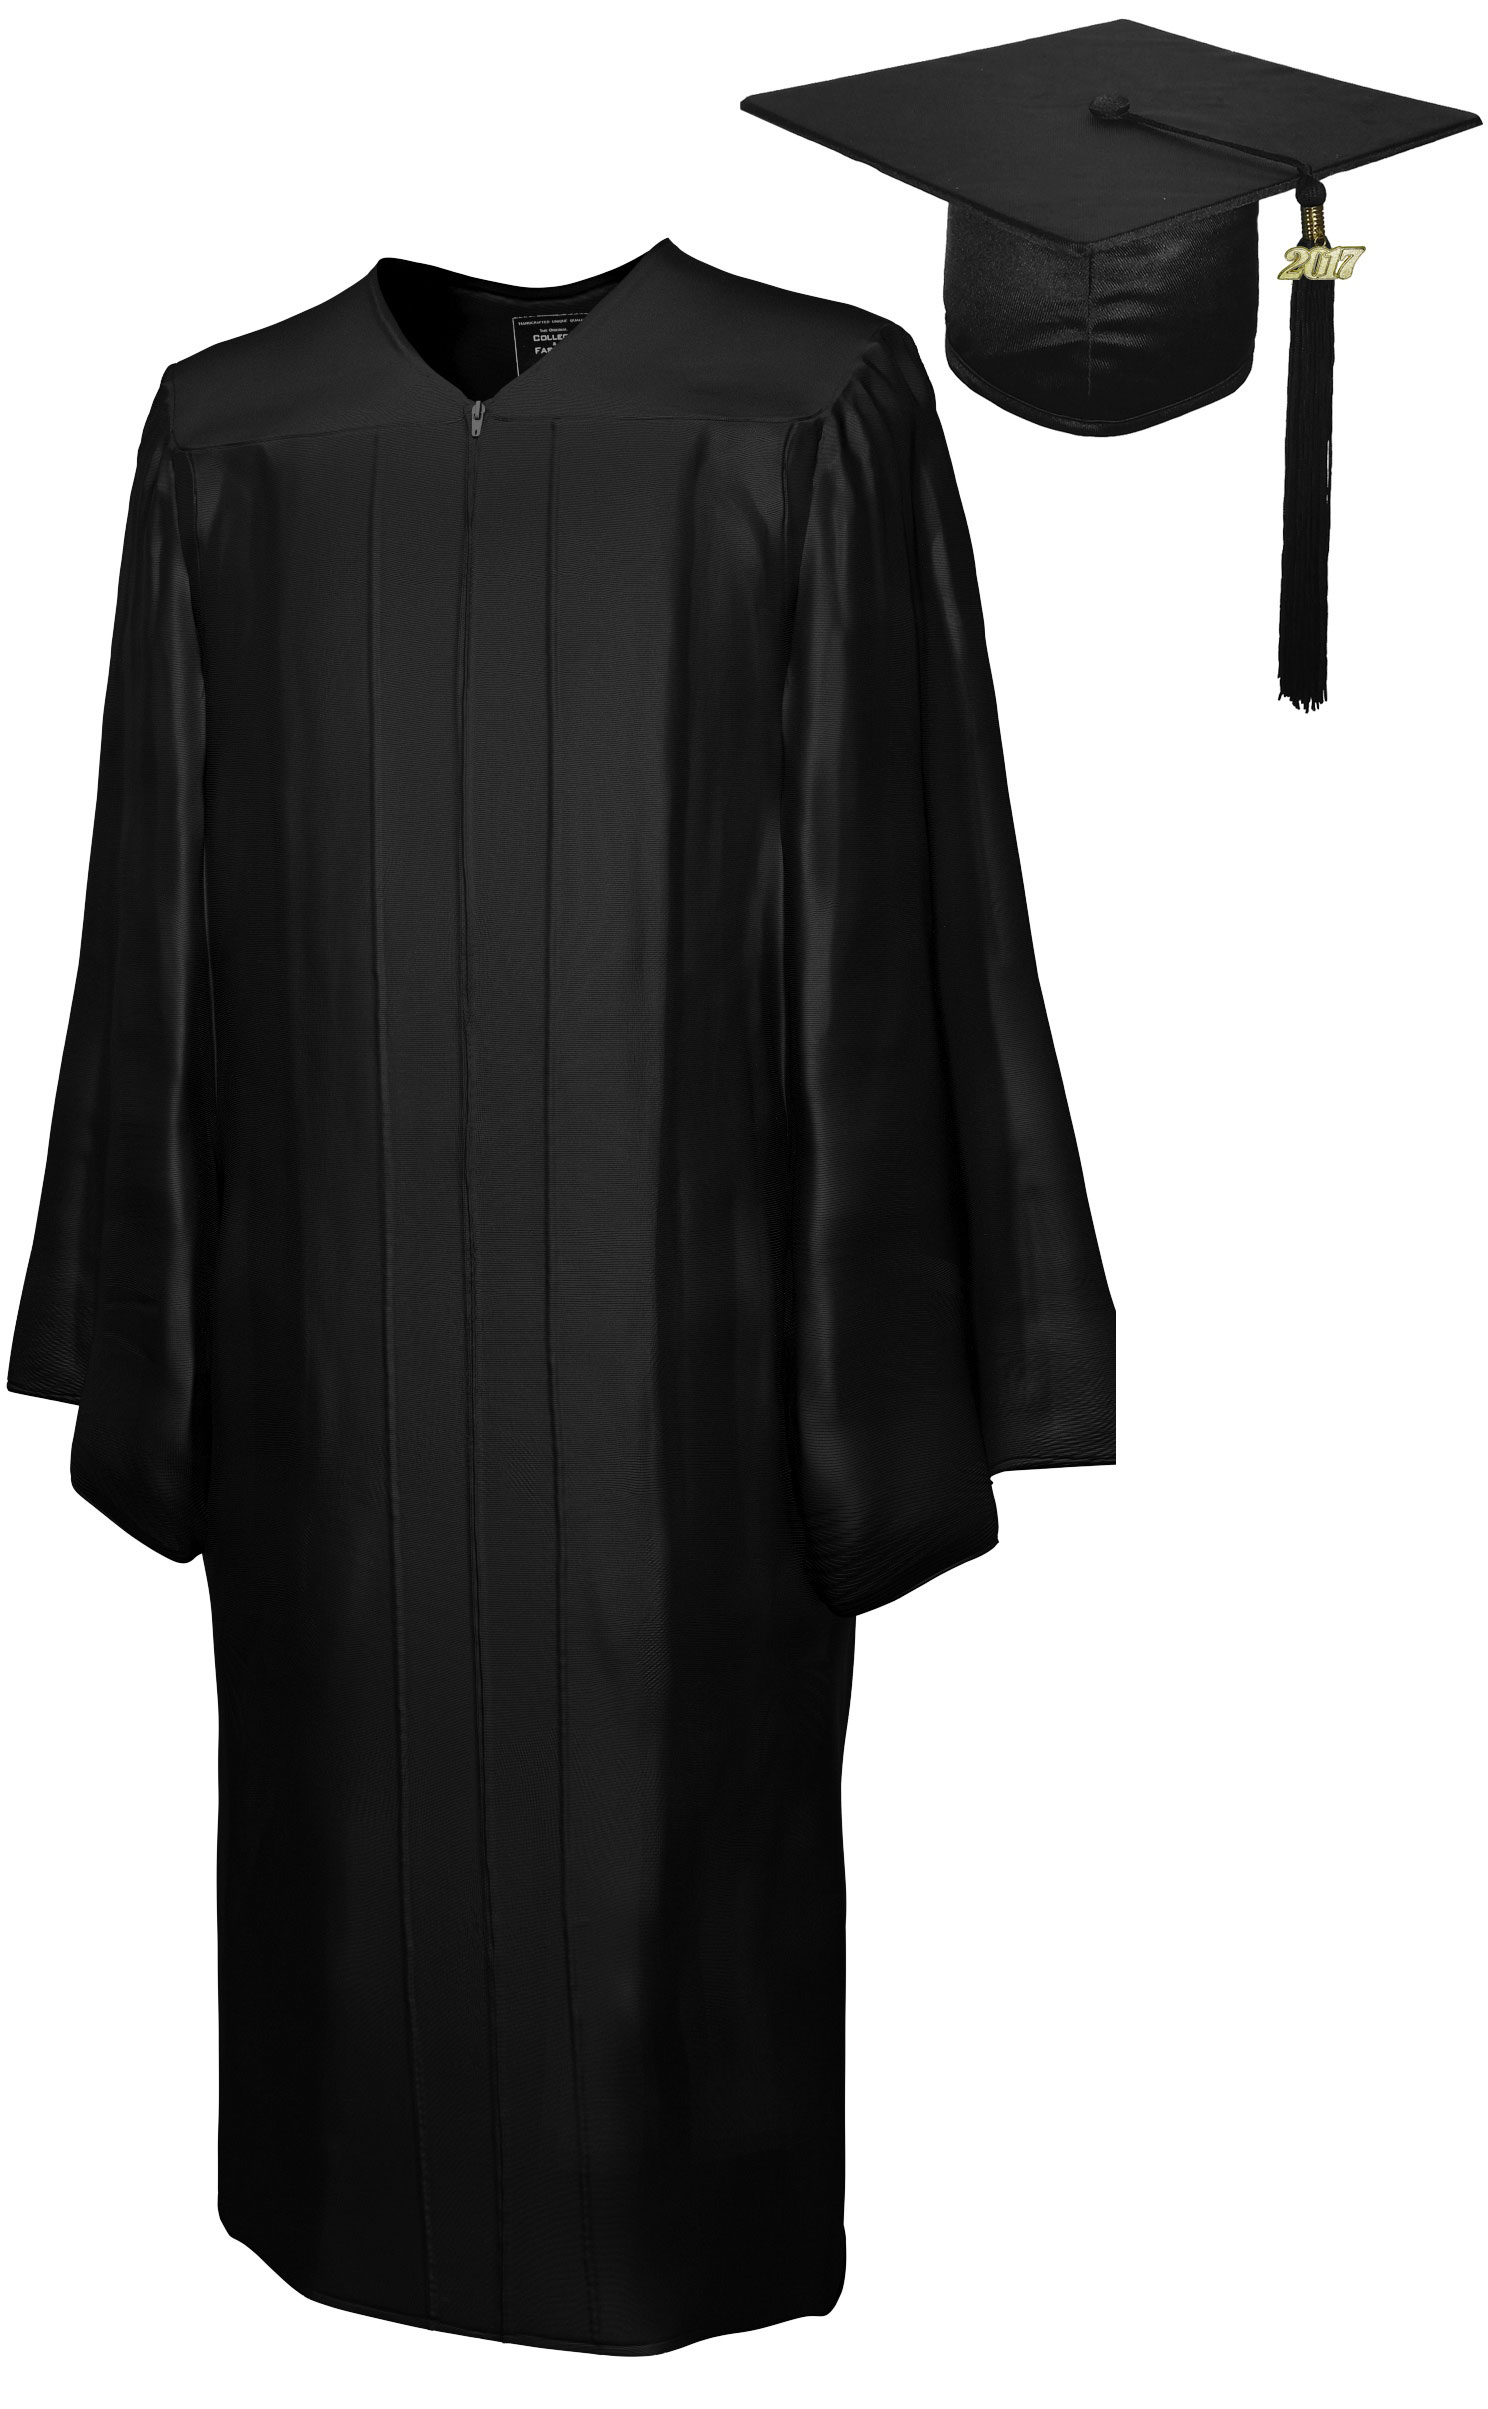 Black Graduation Cap And Diploma